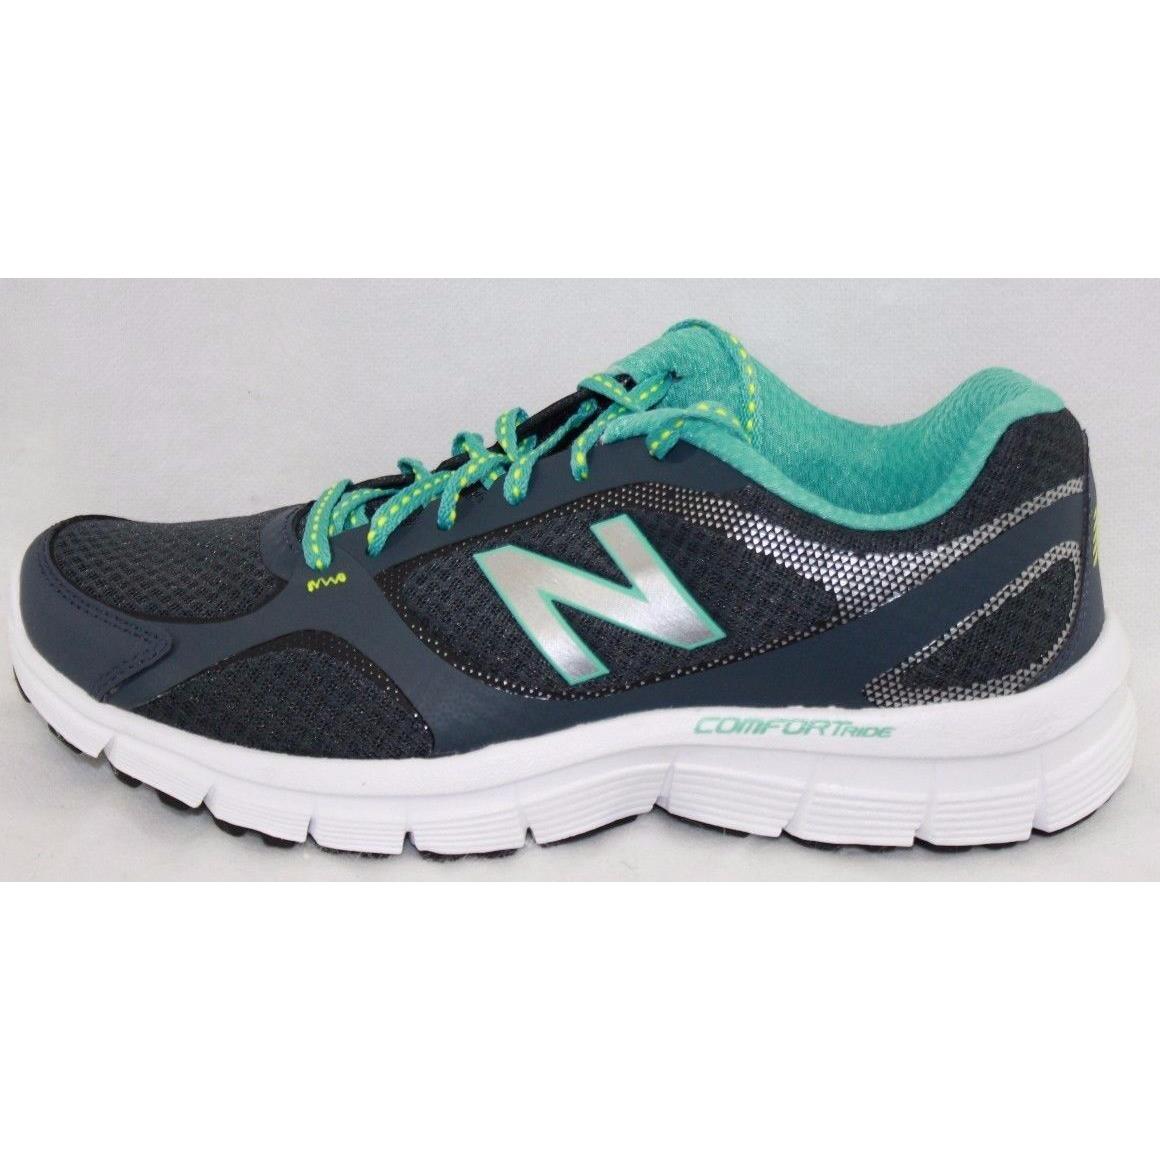 New New Balance 543 PF1 Dark Grey Mint Green Memory Foam Sneakers Shoes 021776737686 - Balance shoes - Grey | SporTipTop